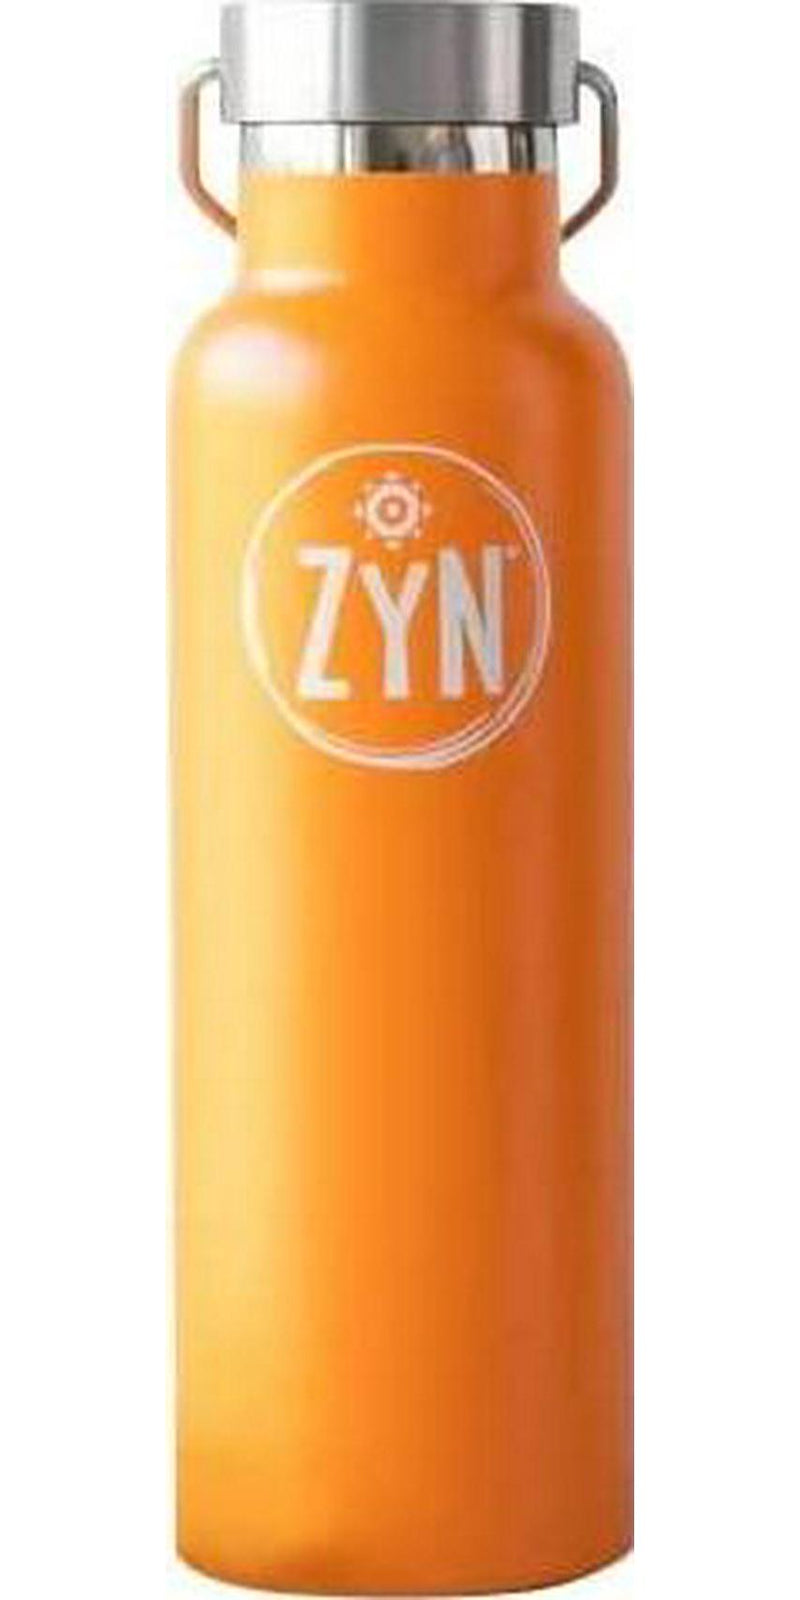 ZYN Premium Reusable Water Bottles (20 Oz) + Drink Mix Variety Packets